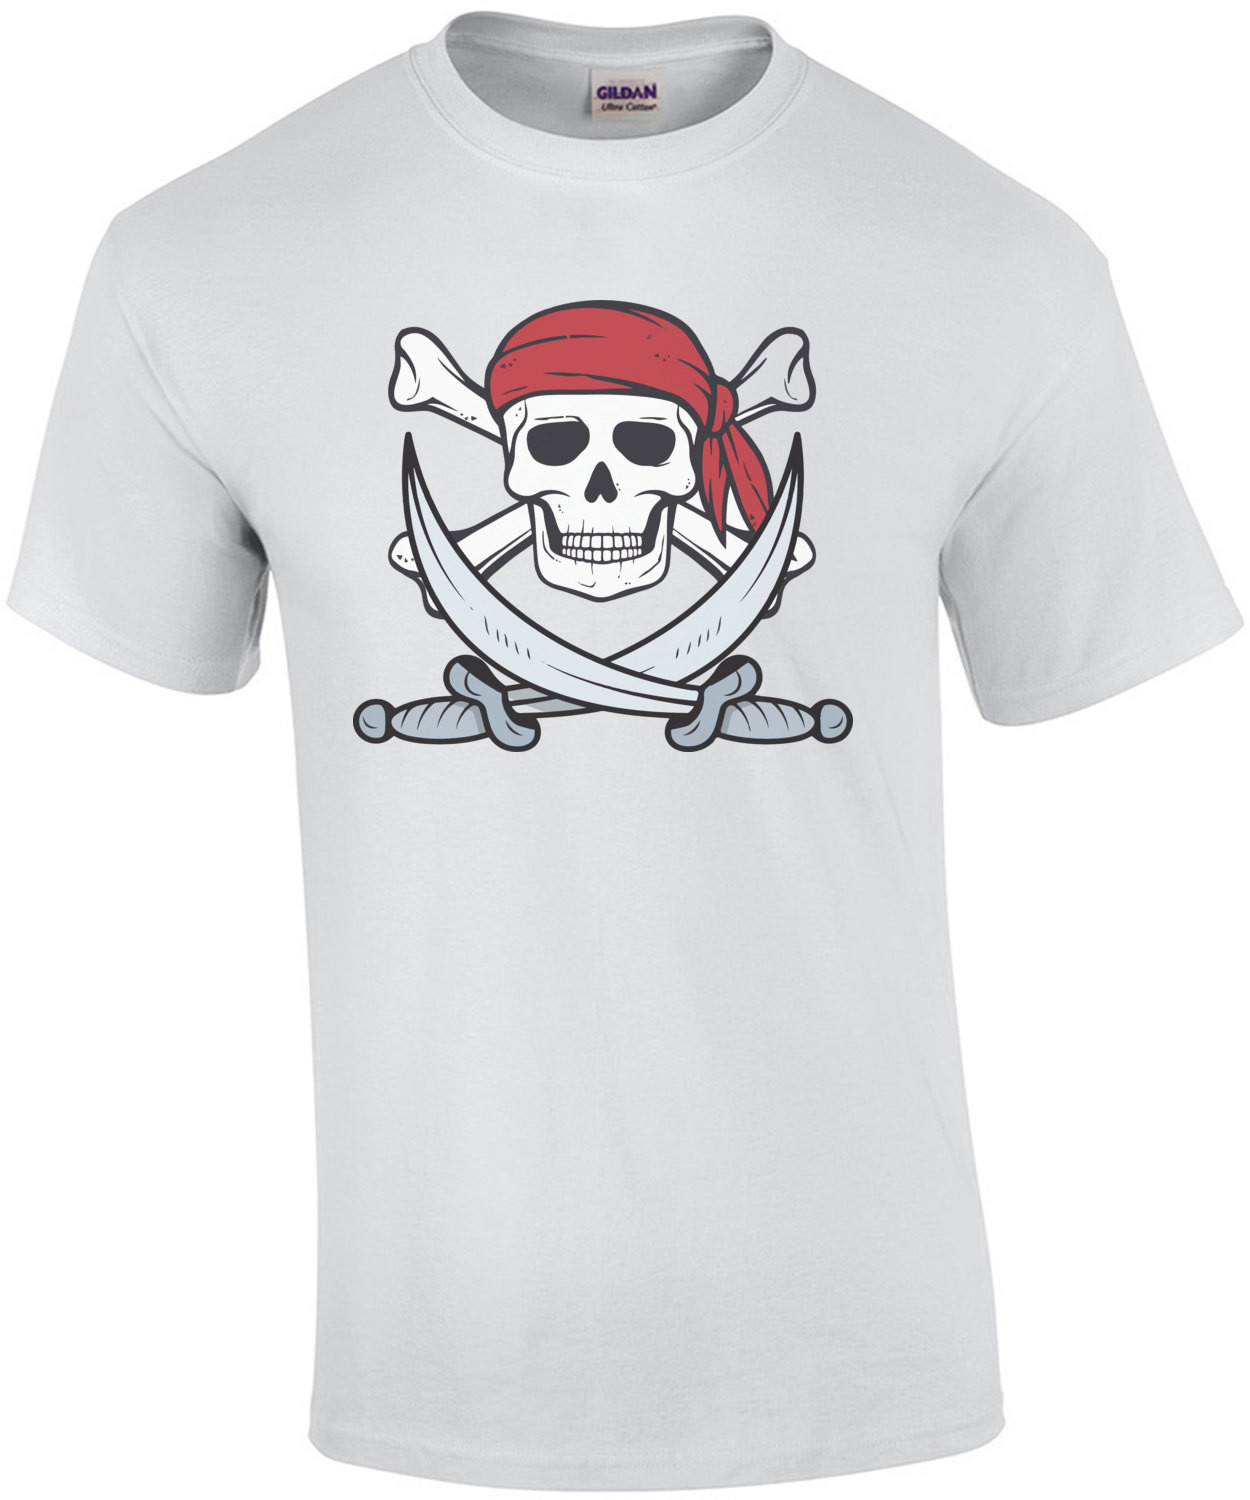 Jolly Roger Pirate Flag T-Shirt - Skull & Crossbones Buccaneer Costume Shirt